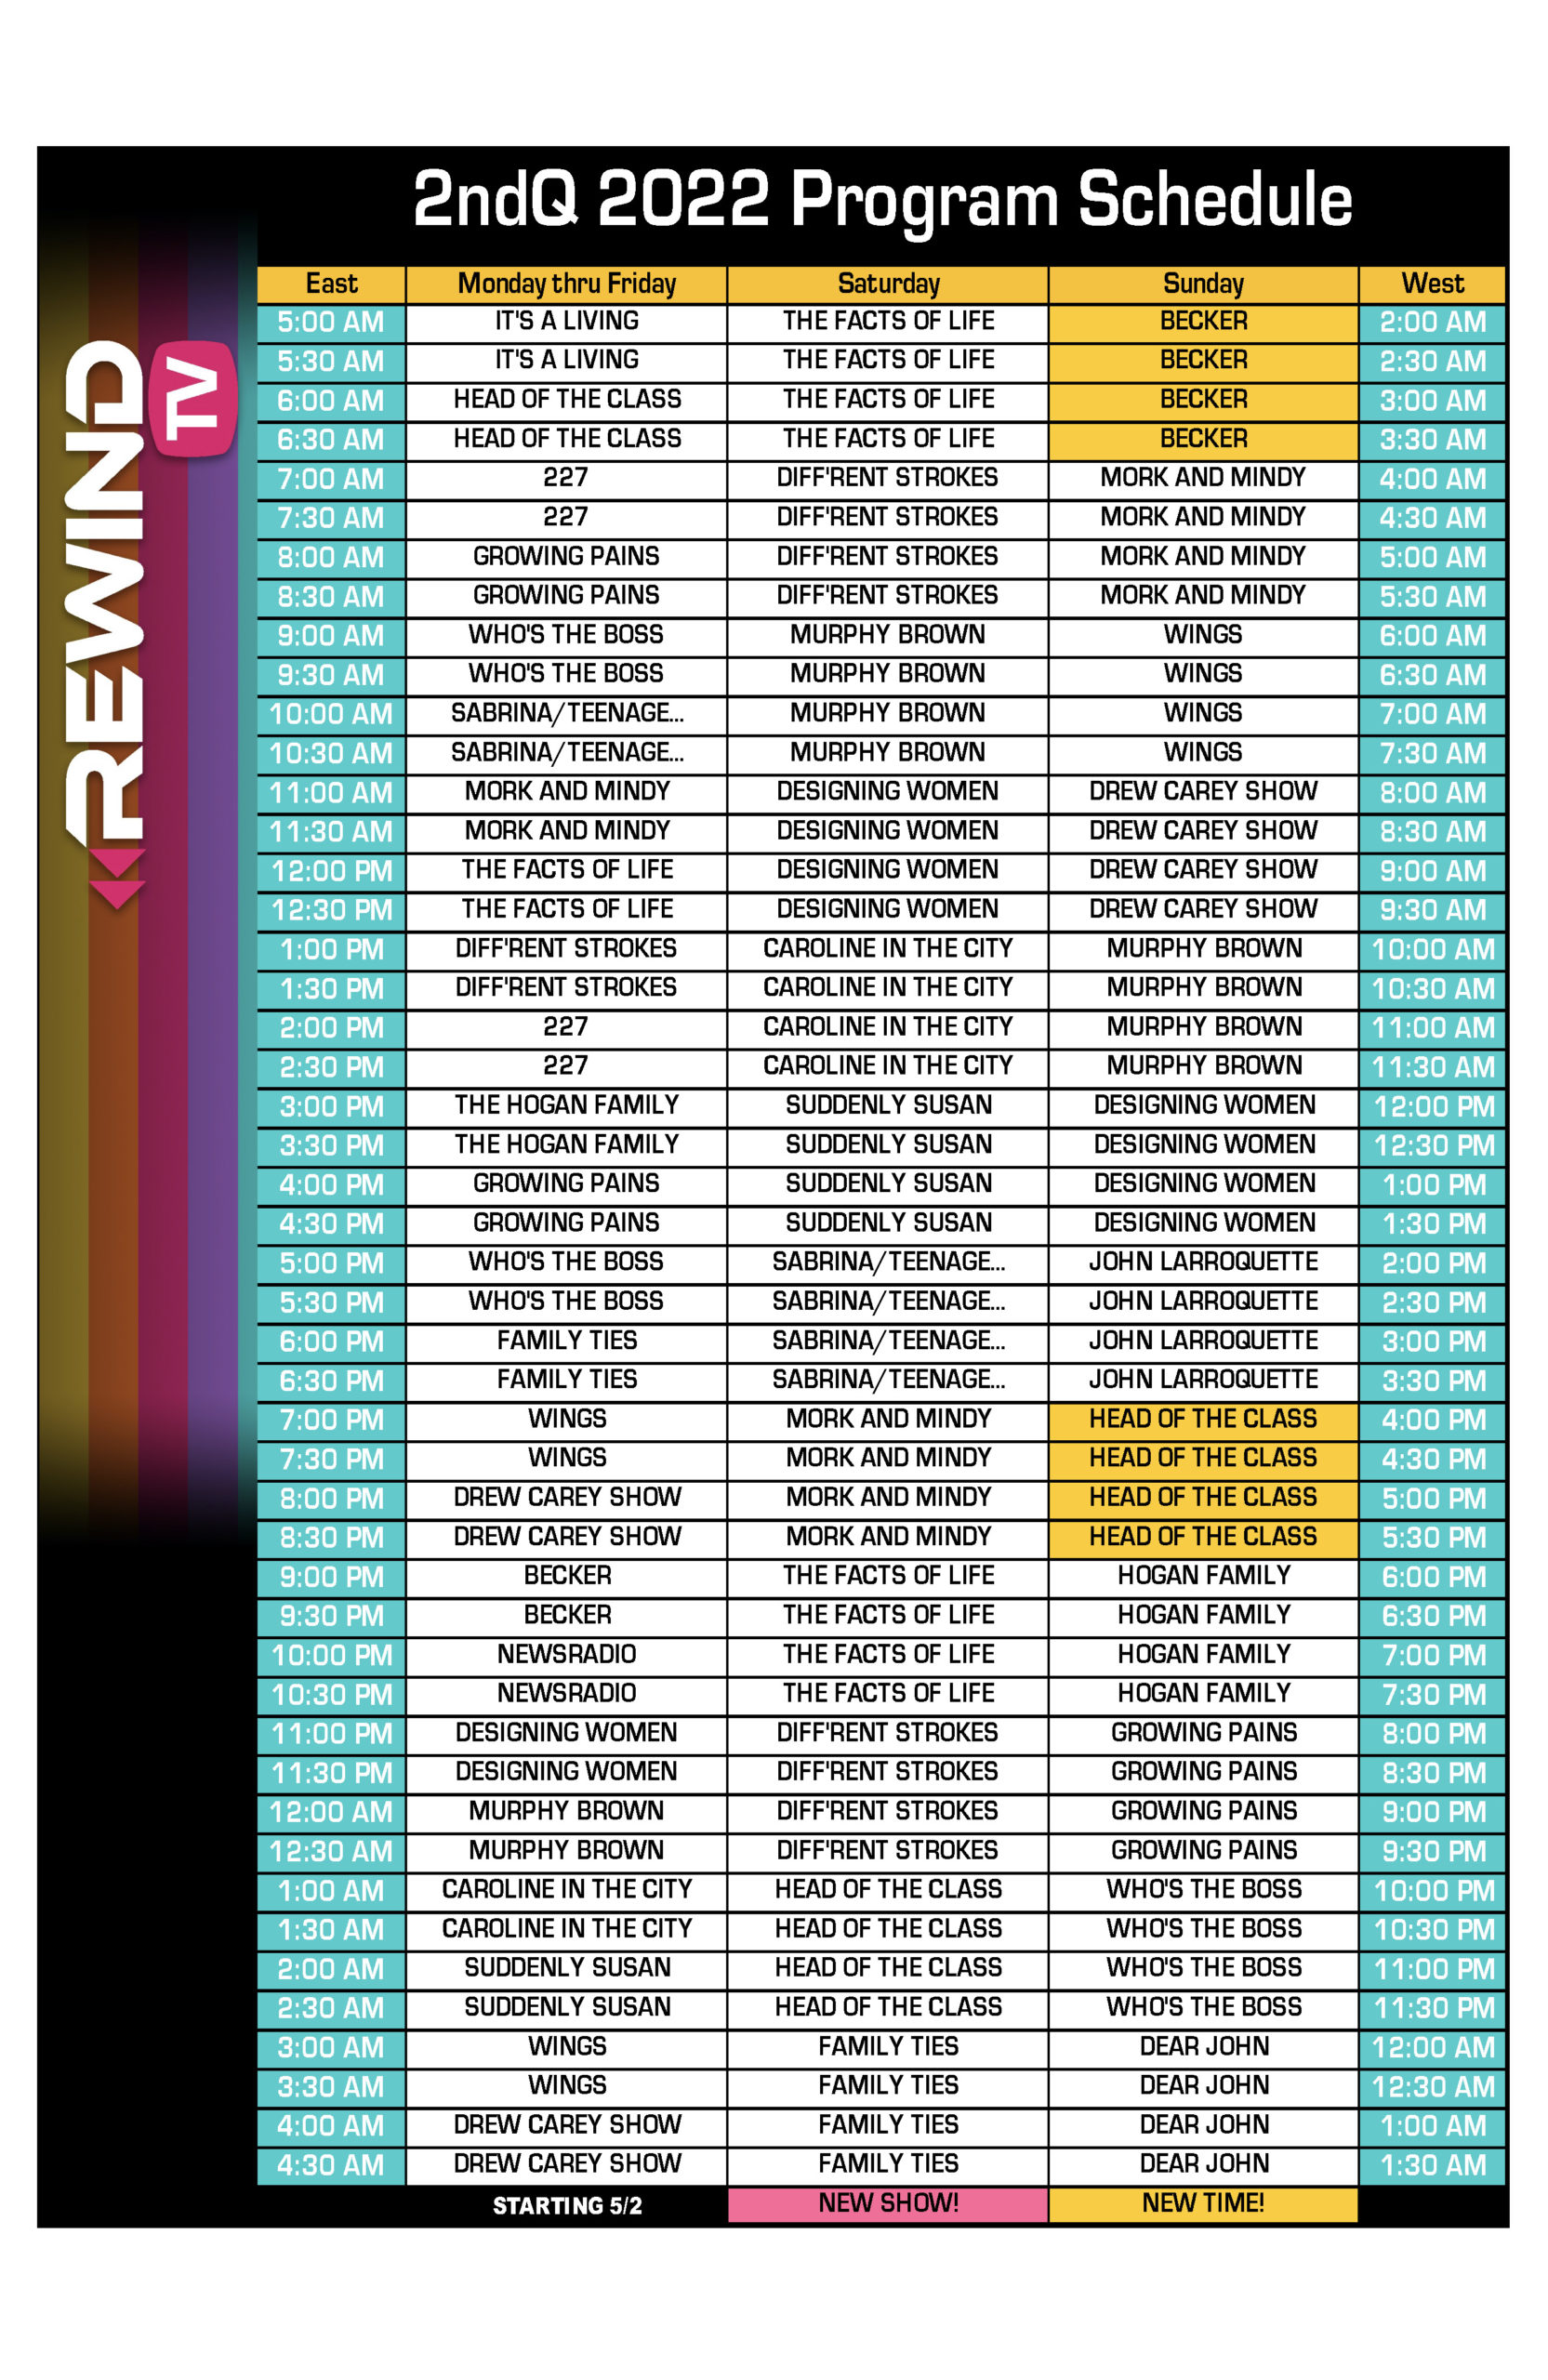 EastWest Schedule Rewind TV